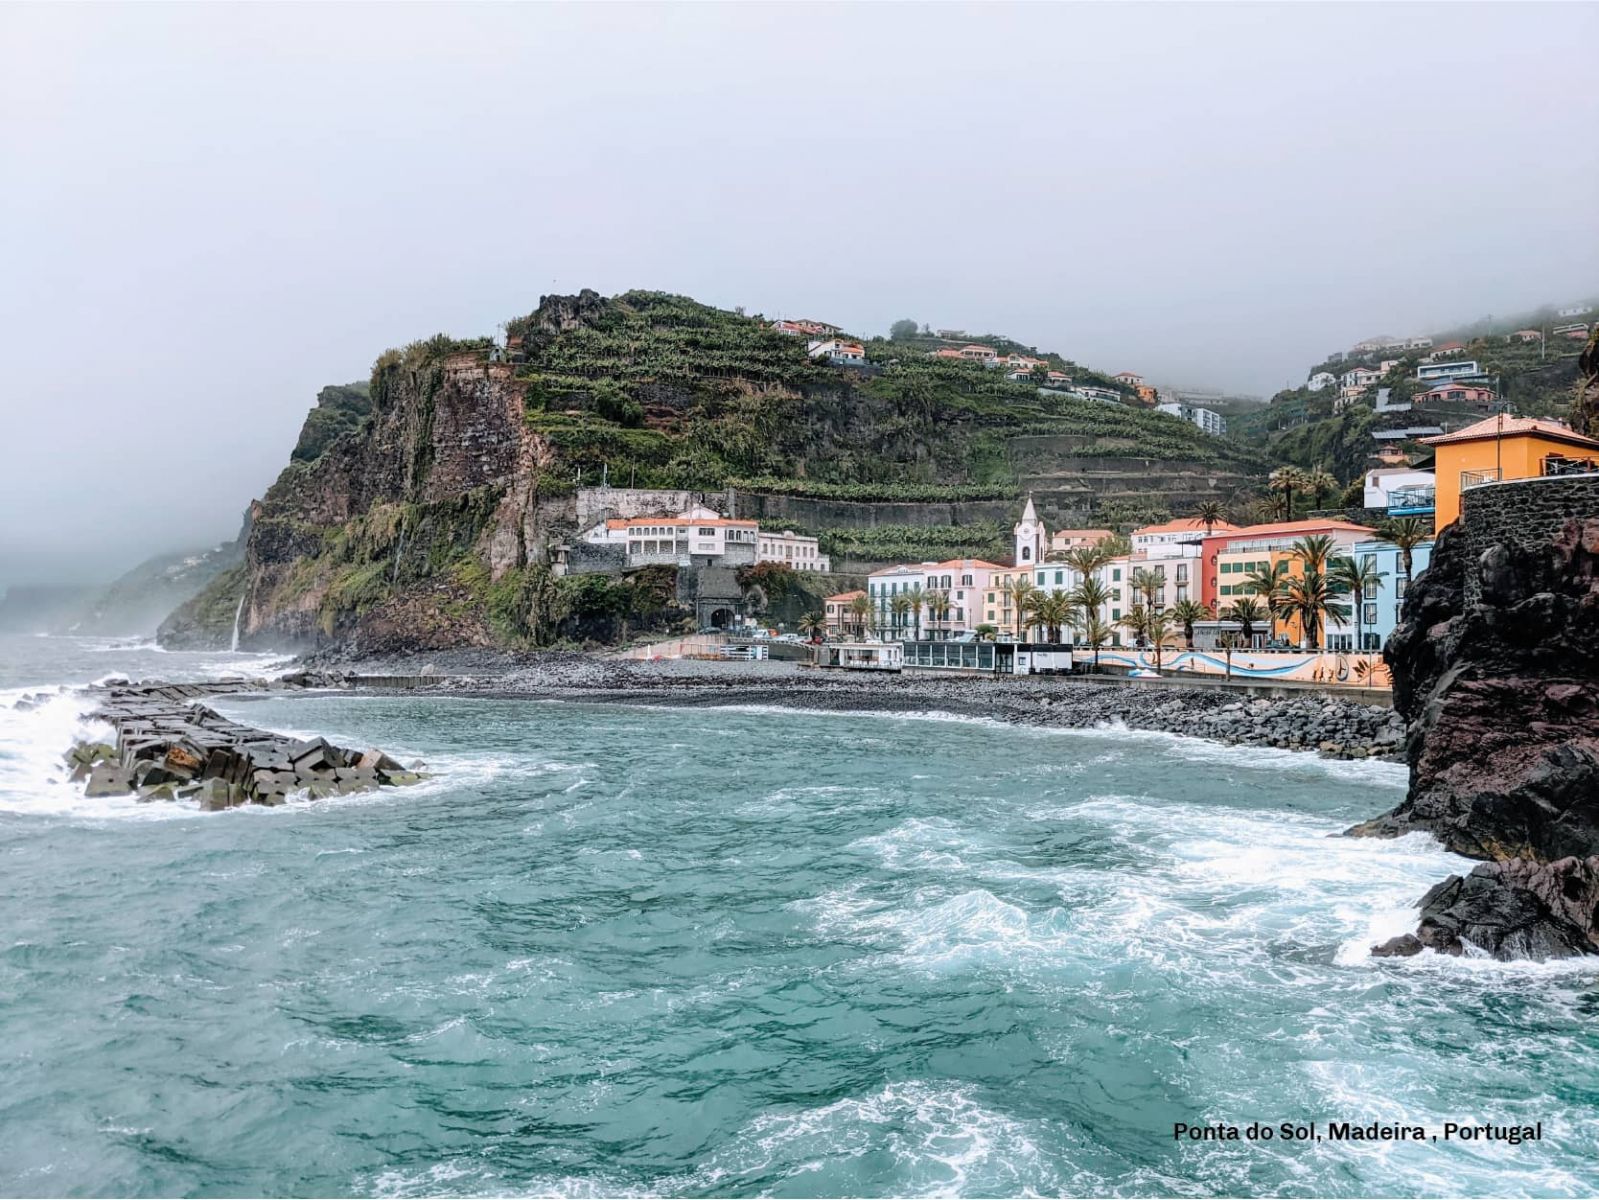 Europe's first Digital Nomad Villa in Ponta do Sol, Madeira, Portugal. Image Credit: Greg Hadala